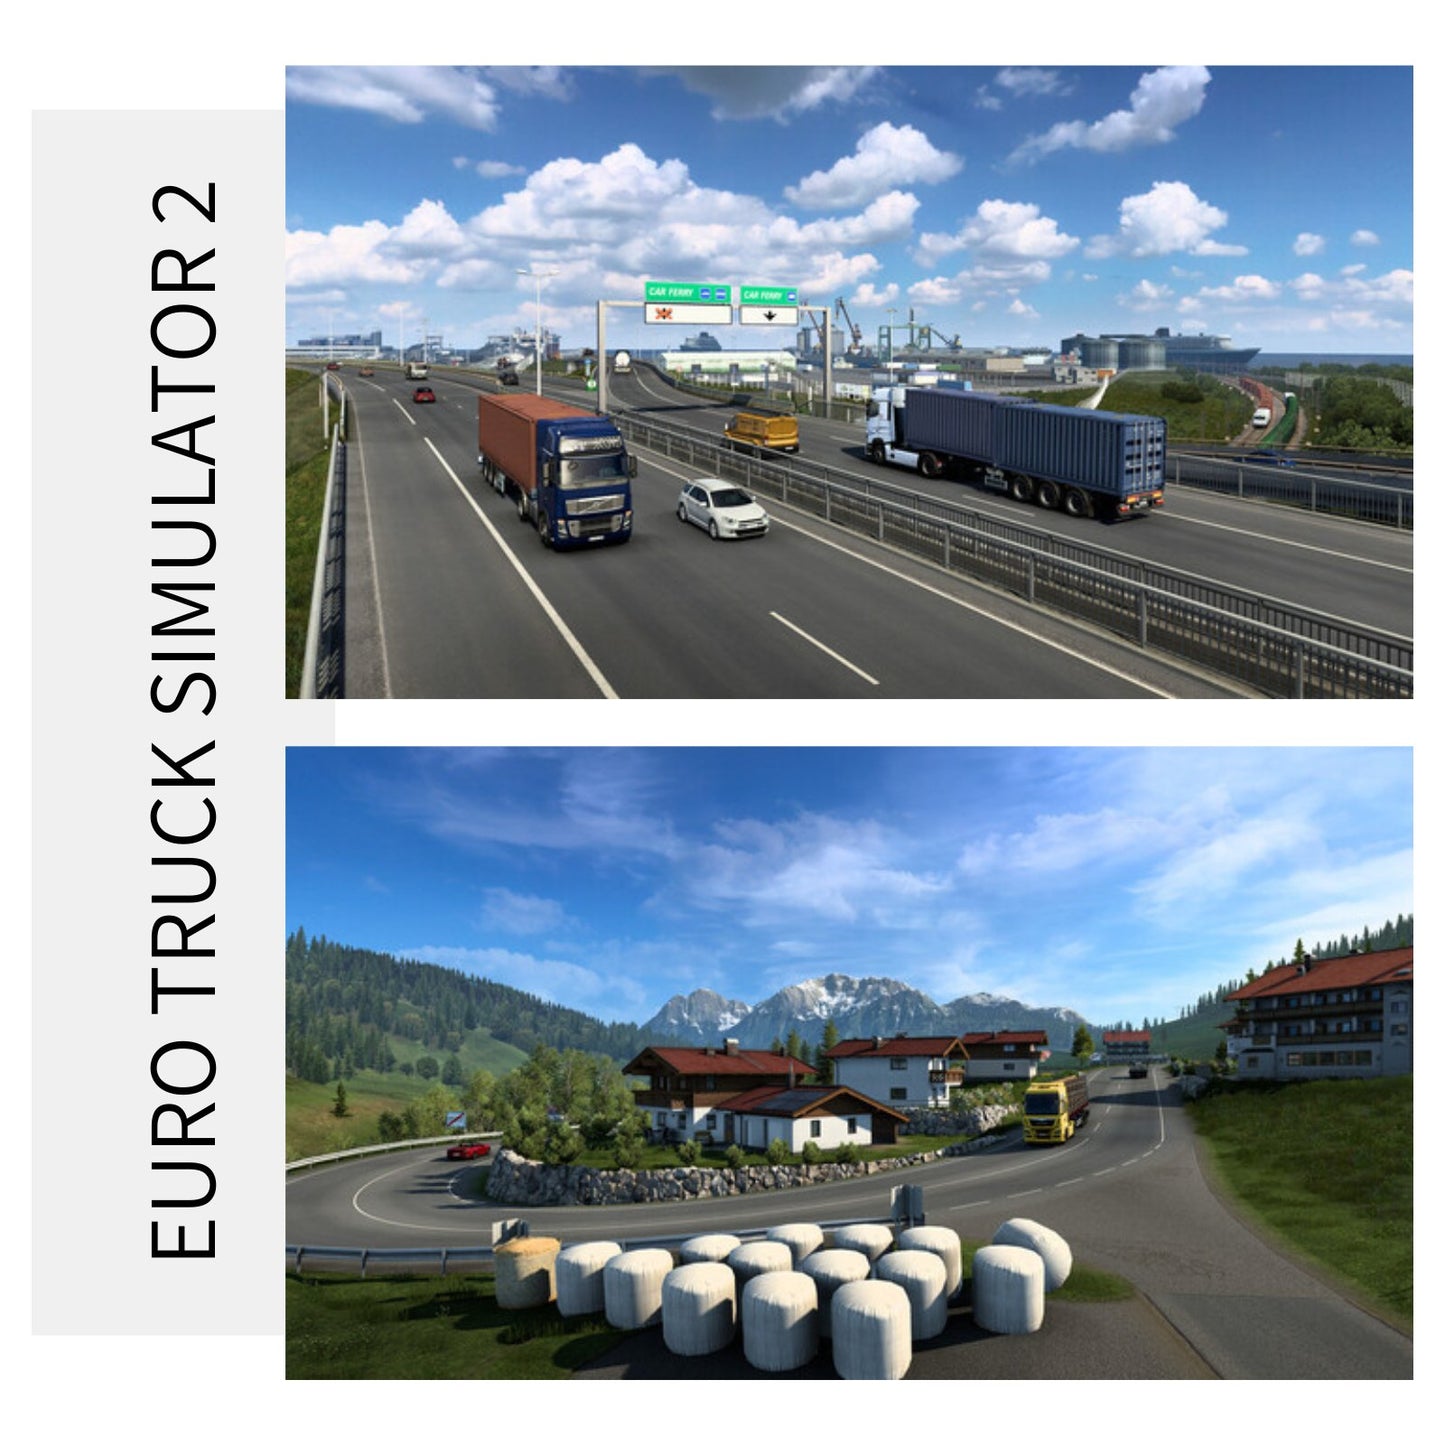 Euro Truck Simulator 2 | PC Game Steam Key - Killonyi